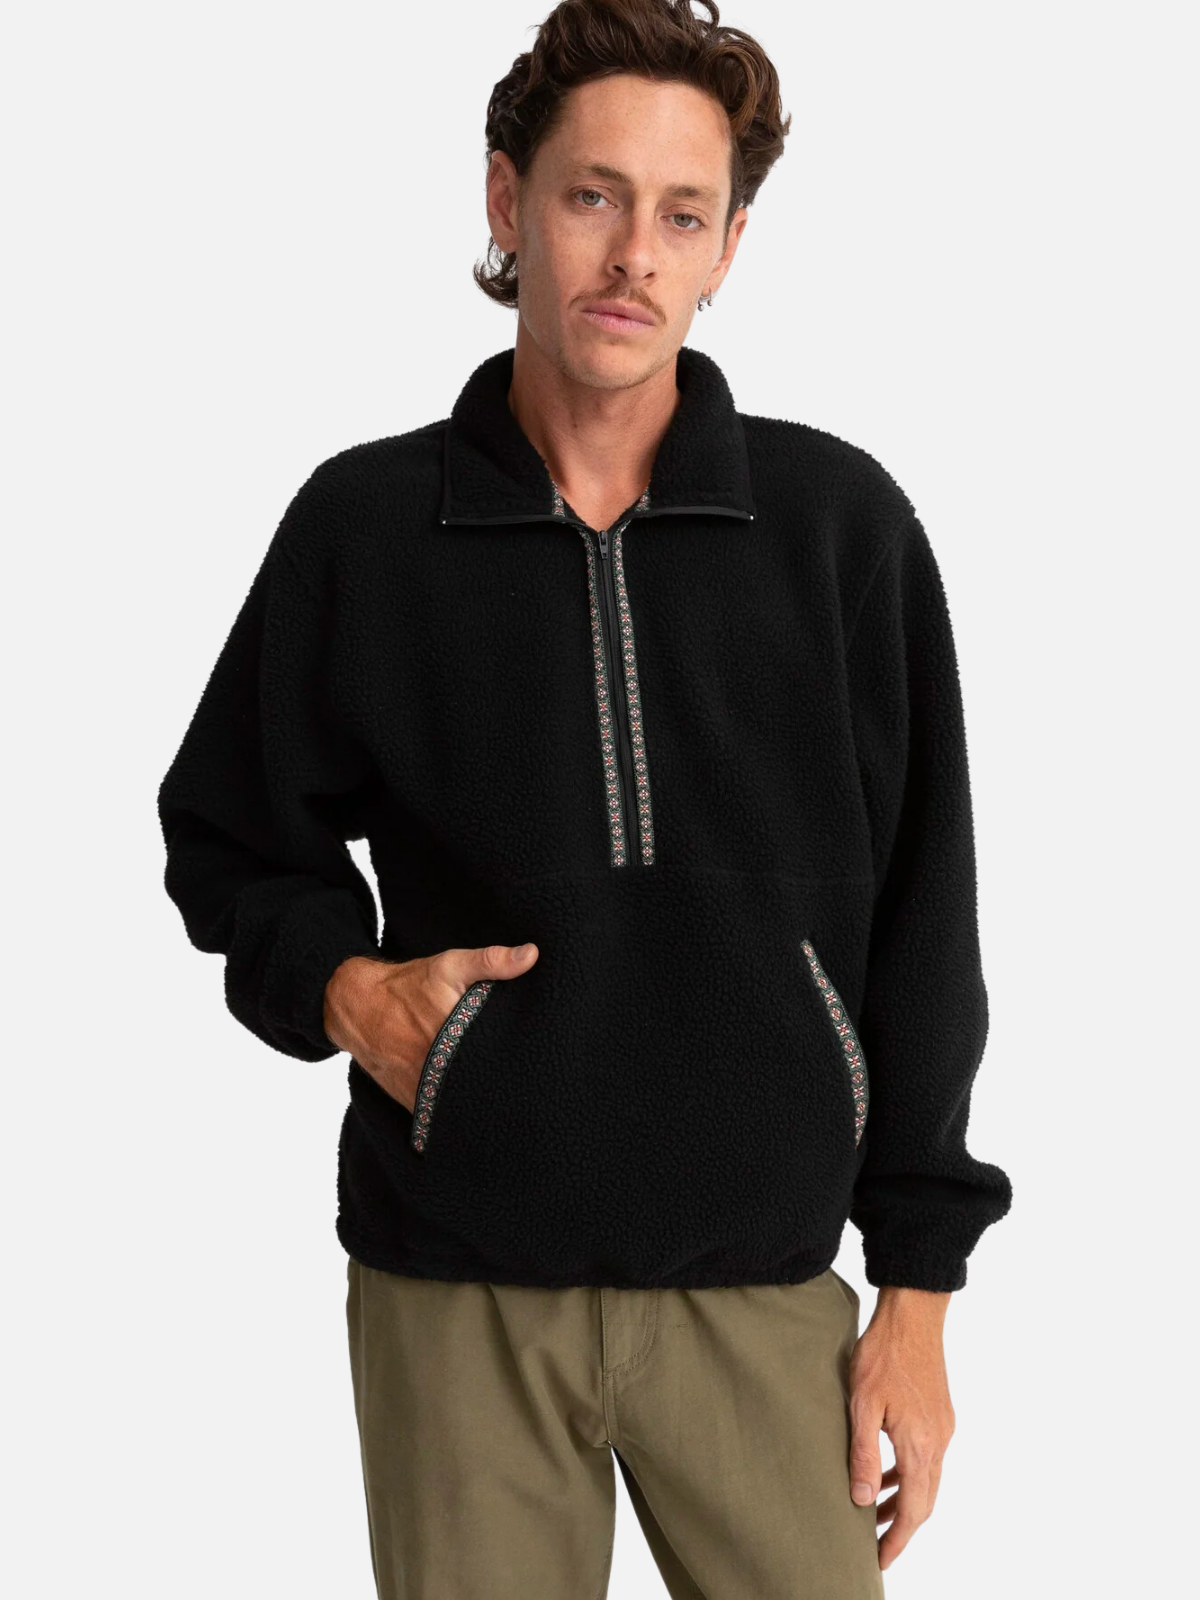 rhythm sherpa pullover halfzip black polyester fleece kangaroo pockets embroidered details kempt athens ga georgia men's clothing store